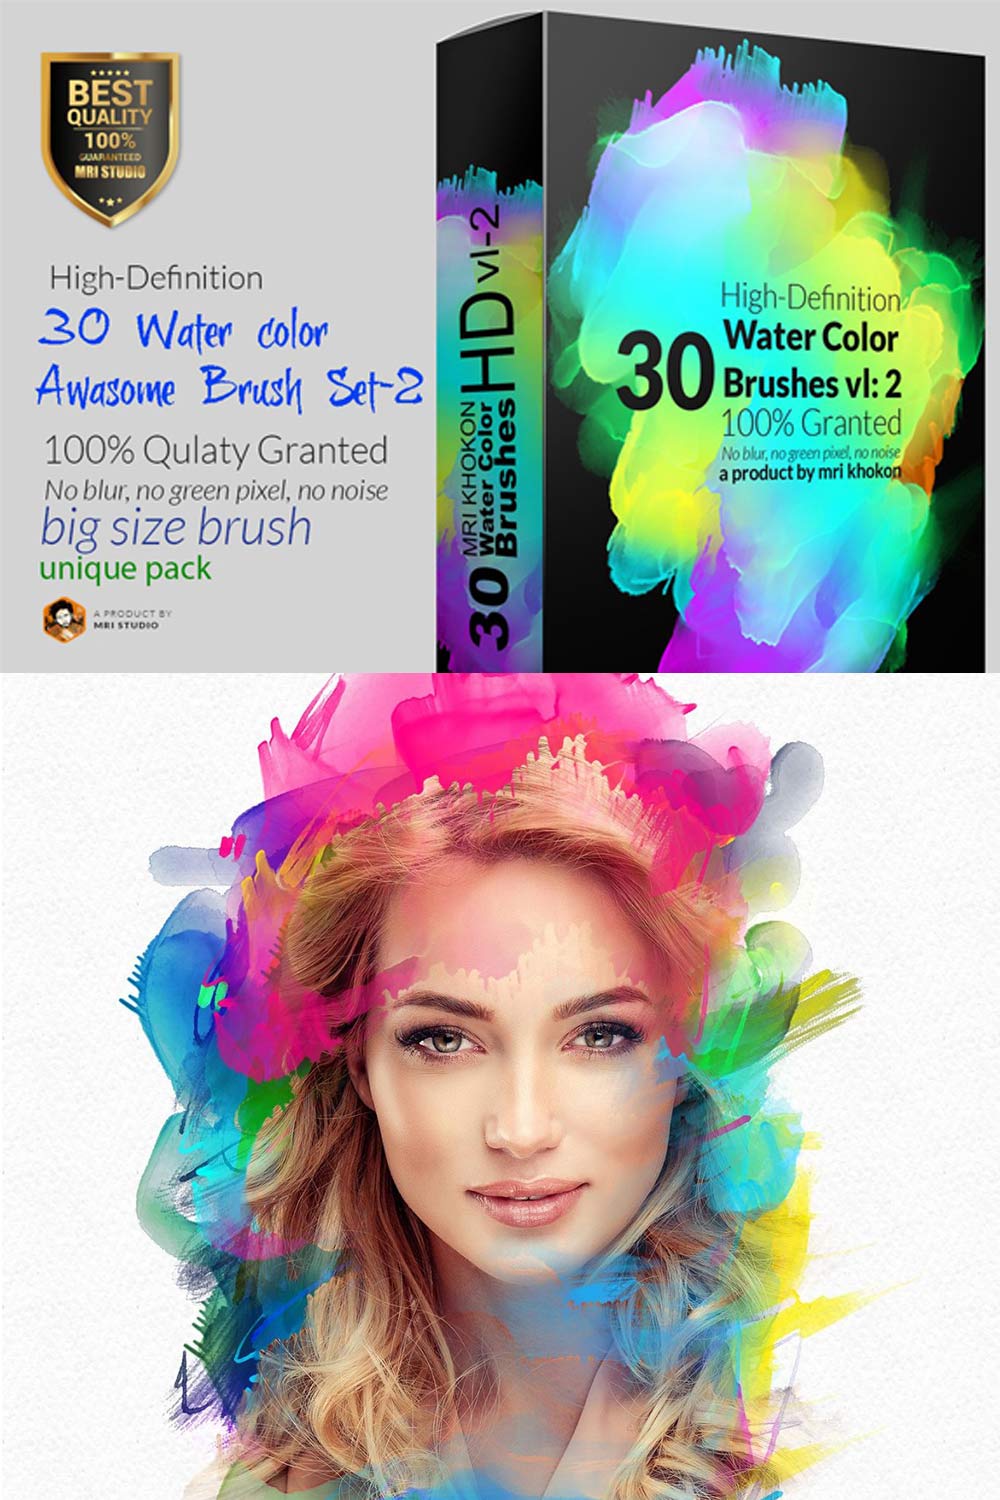 Hi-Res Water color PS Brush Set-2 pinterest preview image.